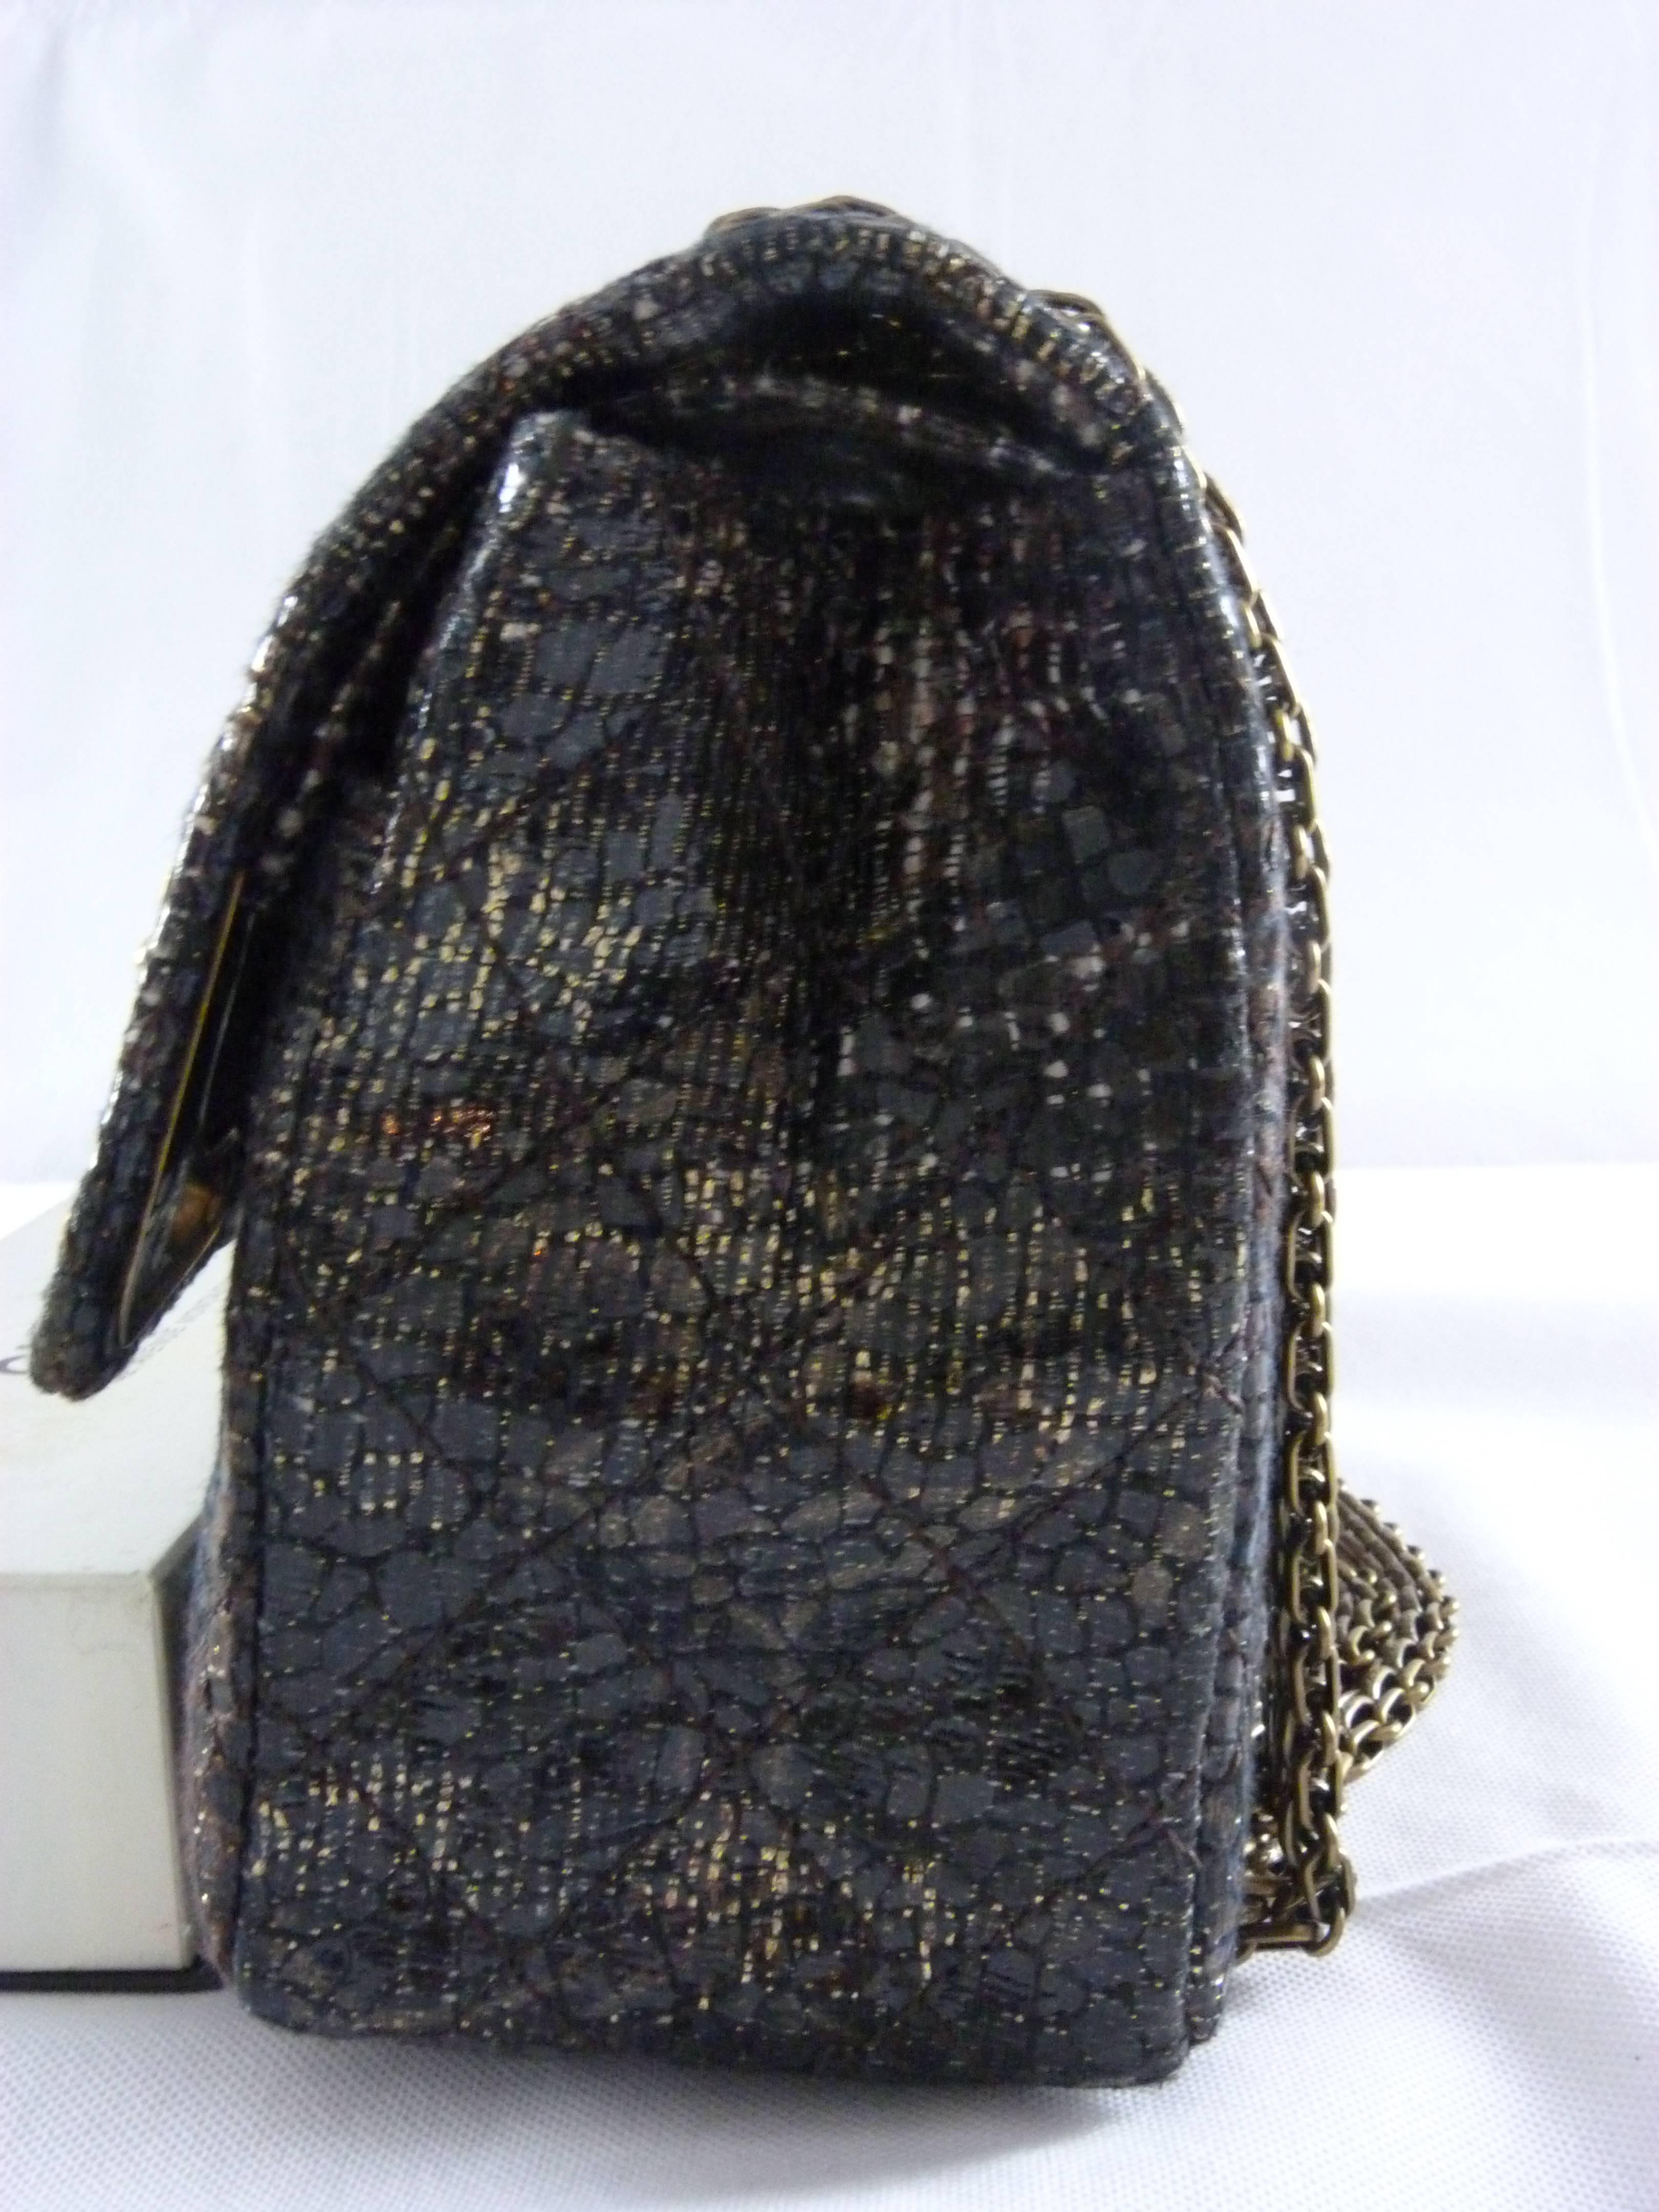 Black 2.55 Chanel Bag